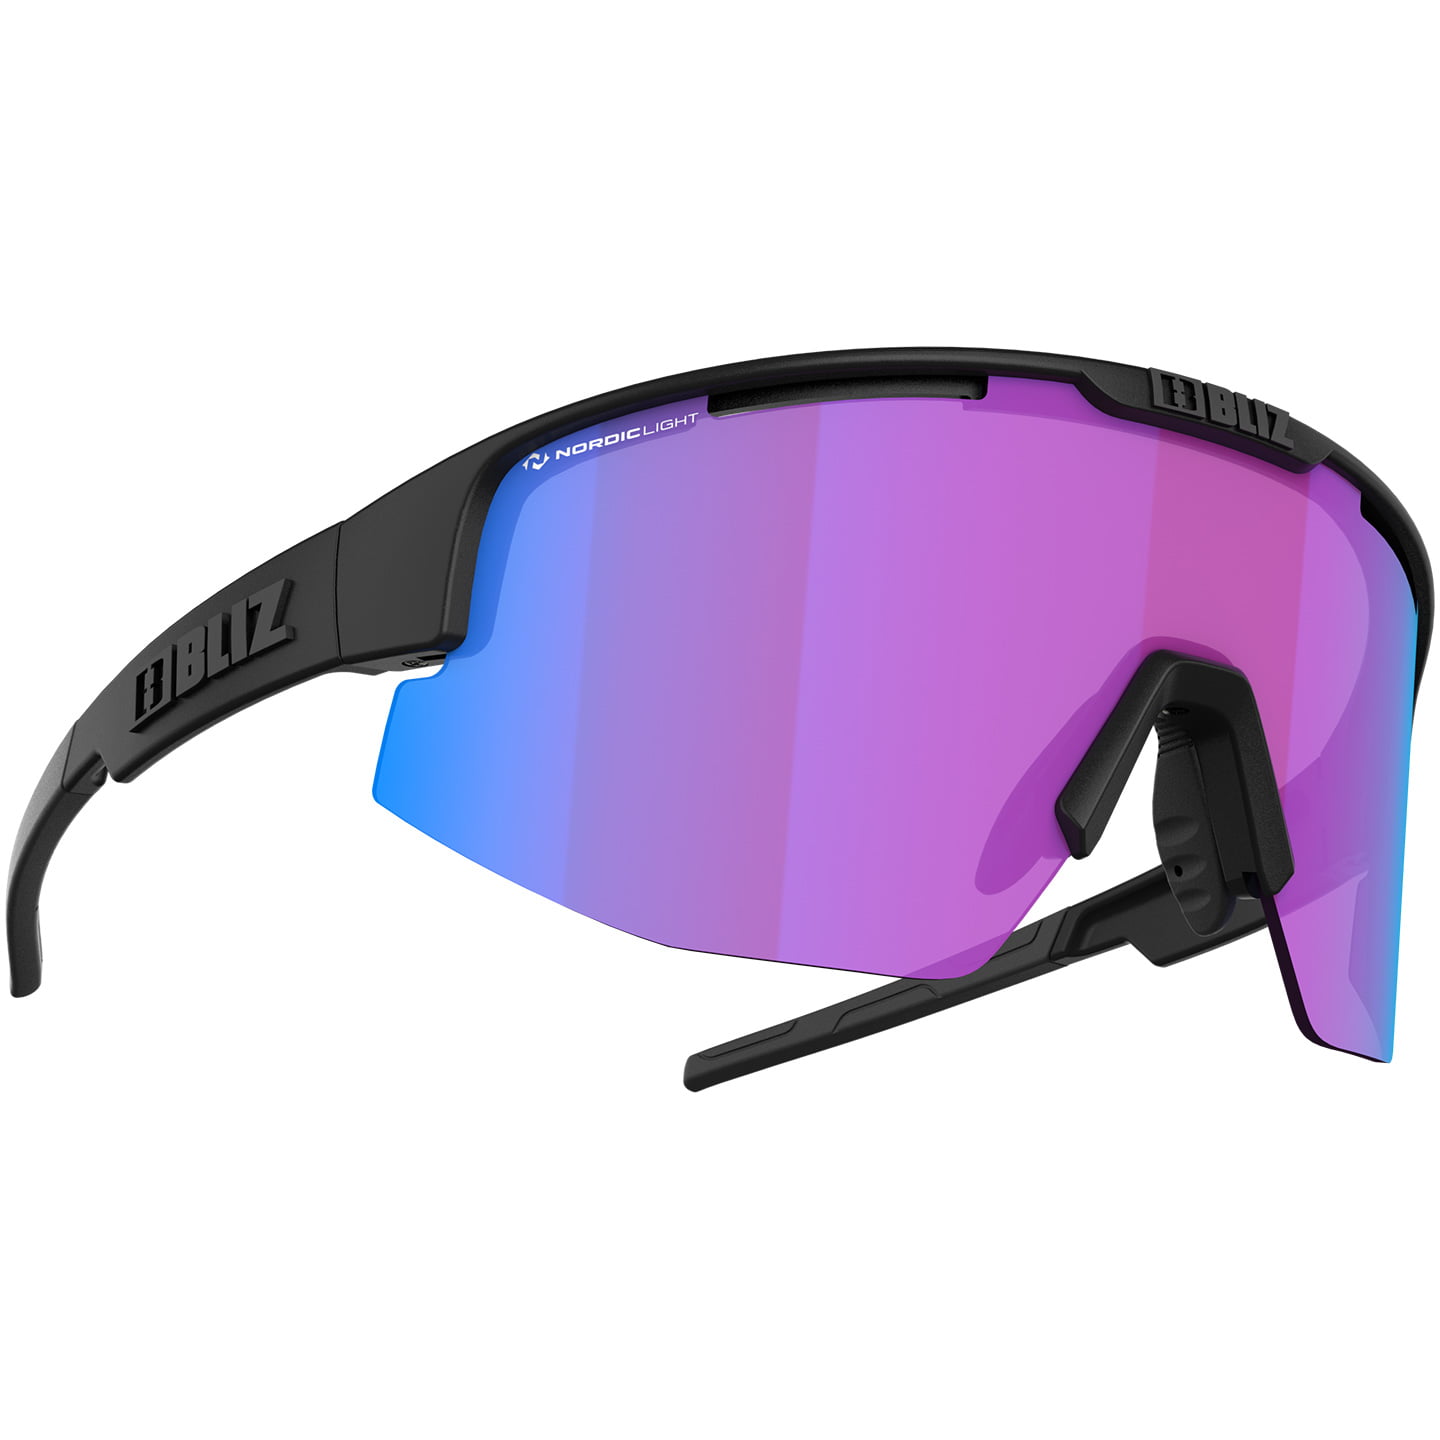 BLIZ Matrix Small Nordic Light 2022 Cycling Eyewear Cycling Glasses, Unisex (women / men), Cycle glasses, Bike accessories